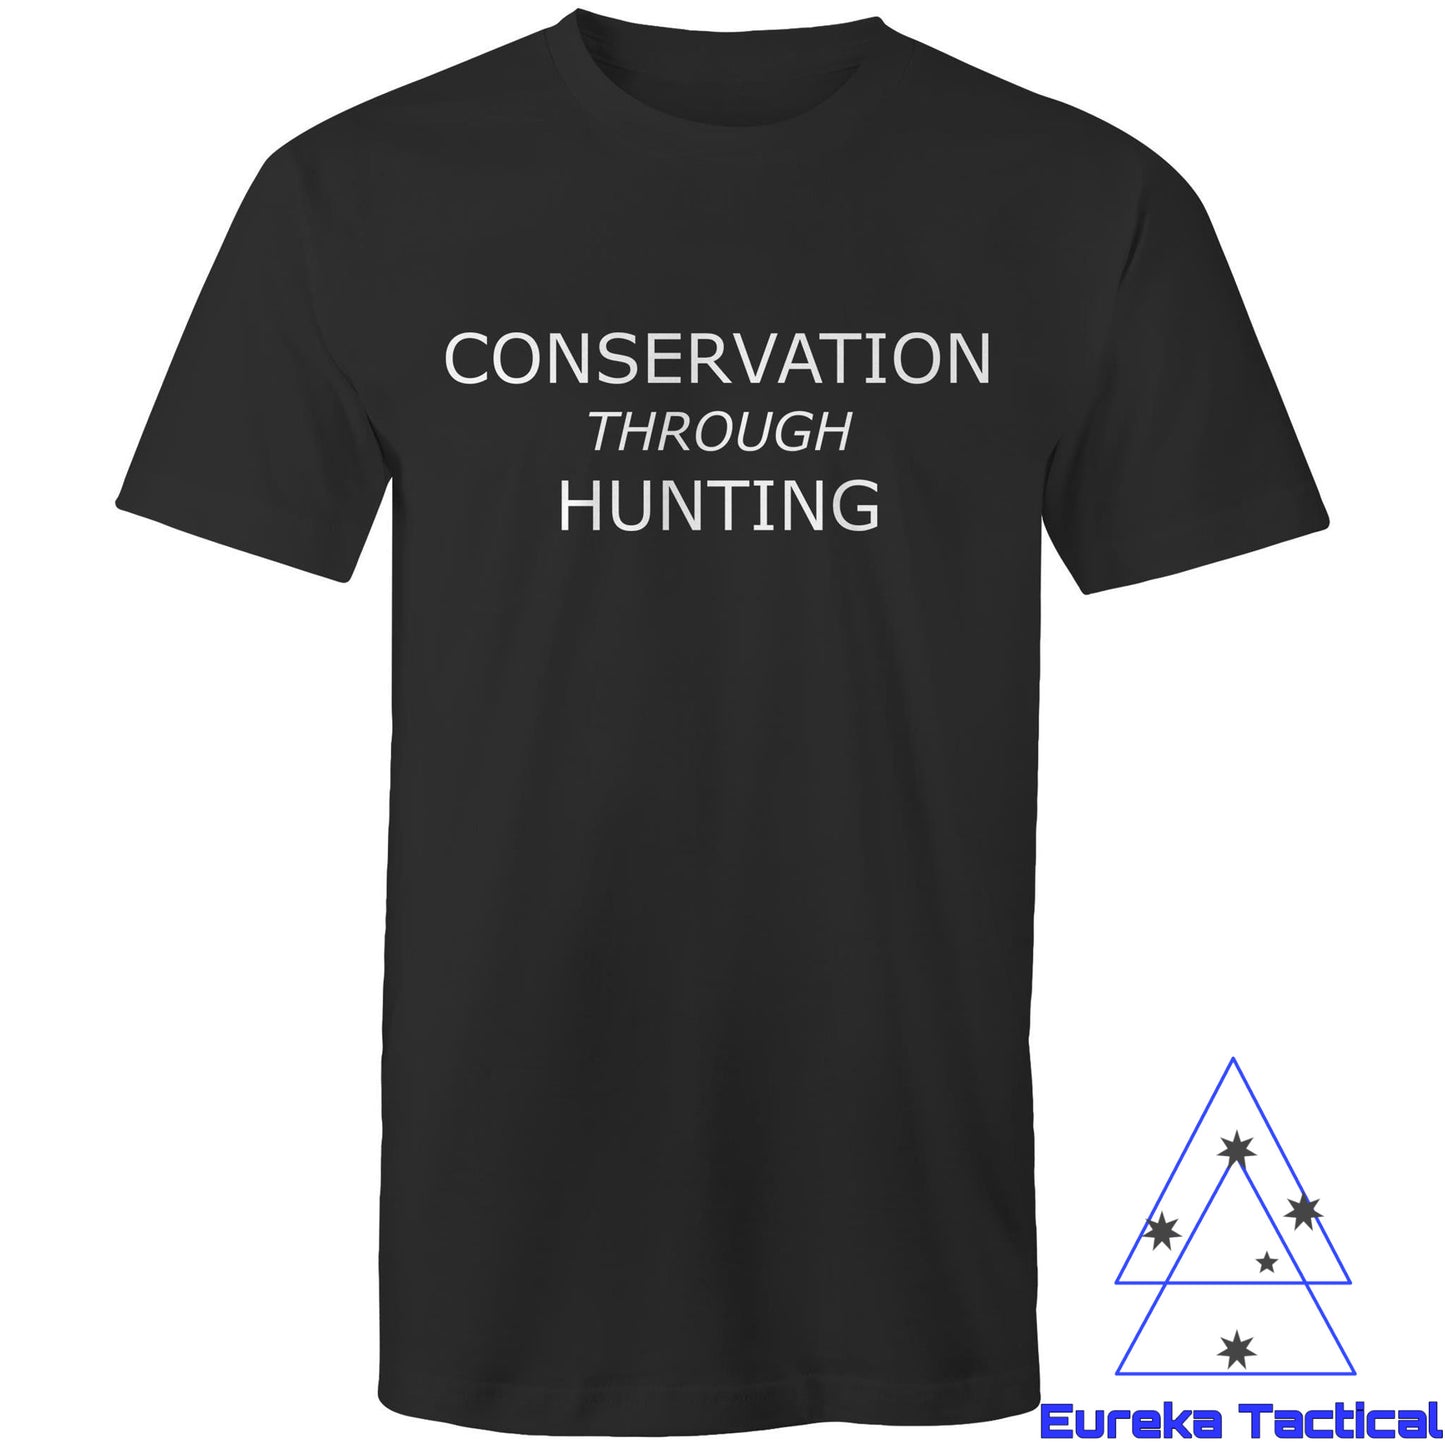 Conservation through hunting. Men's AS Colour 100% Cotton Staple T-Shirt